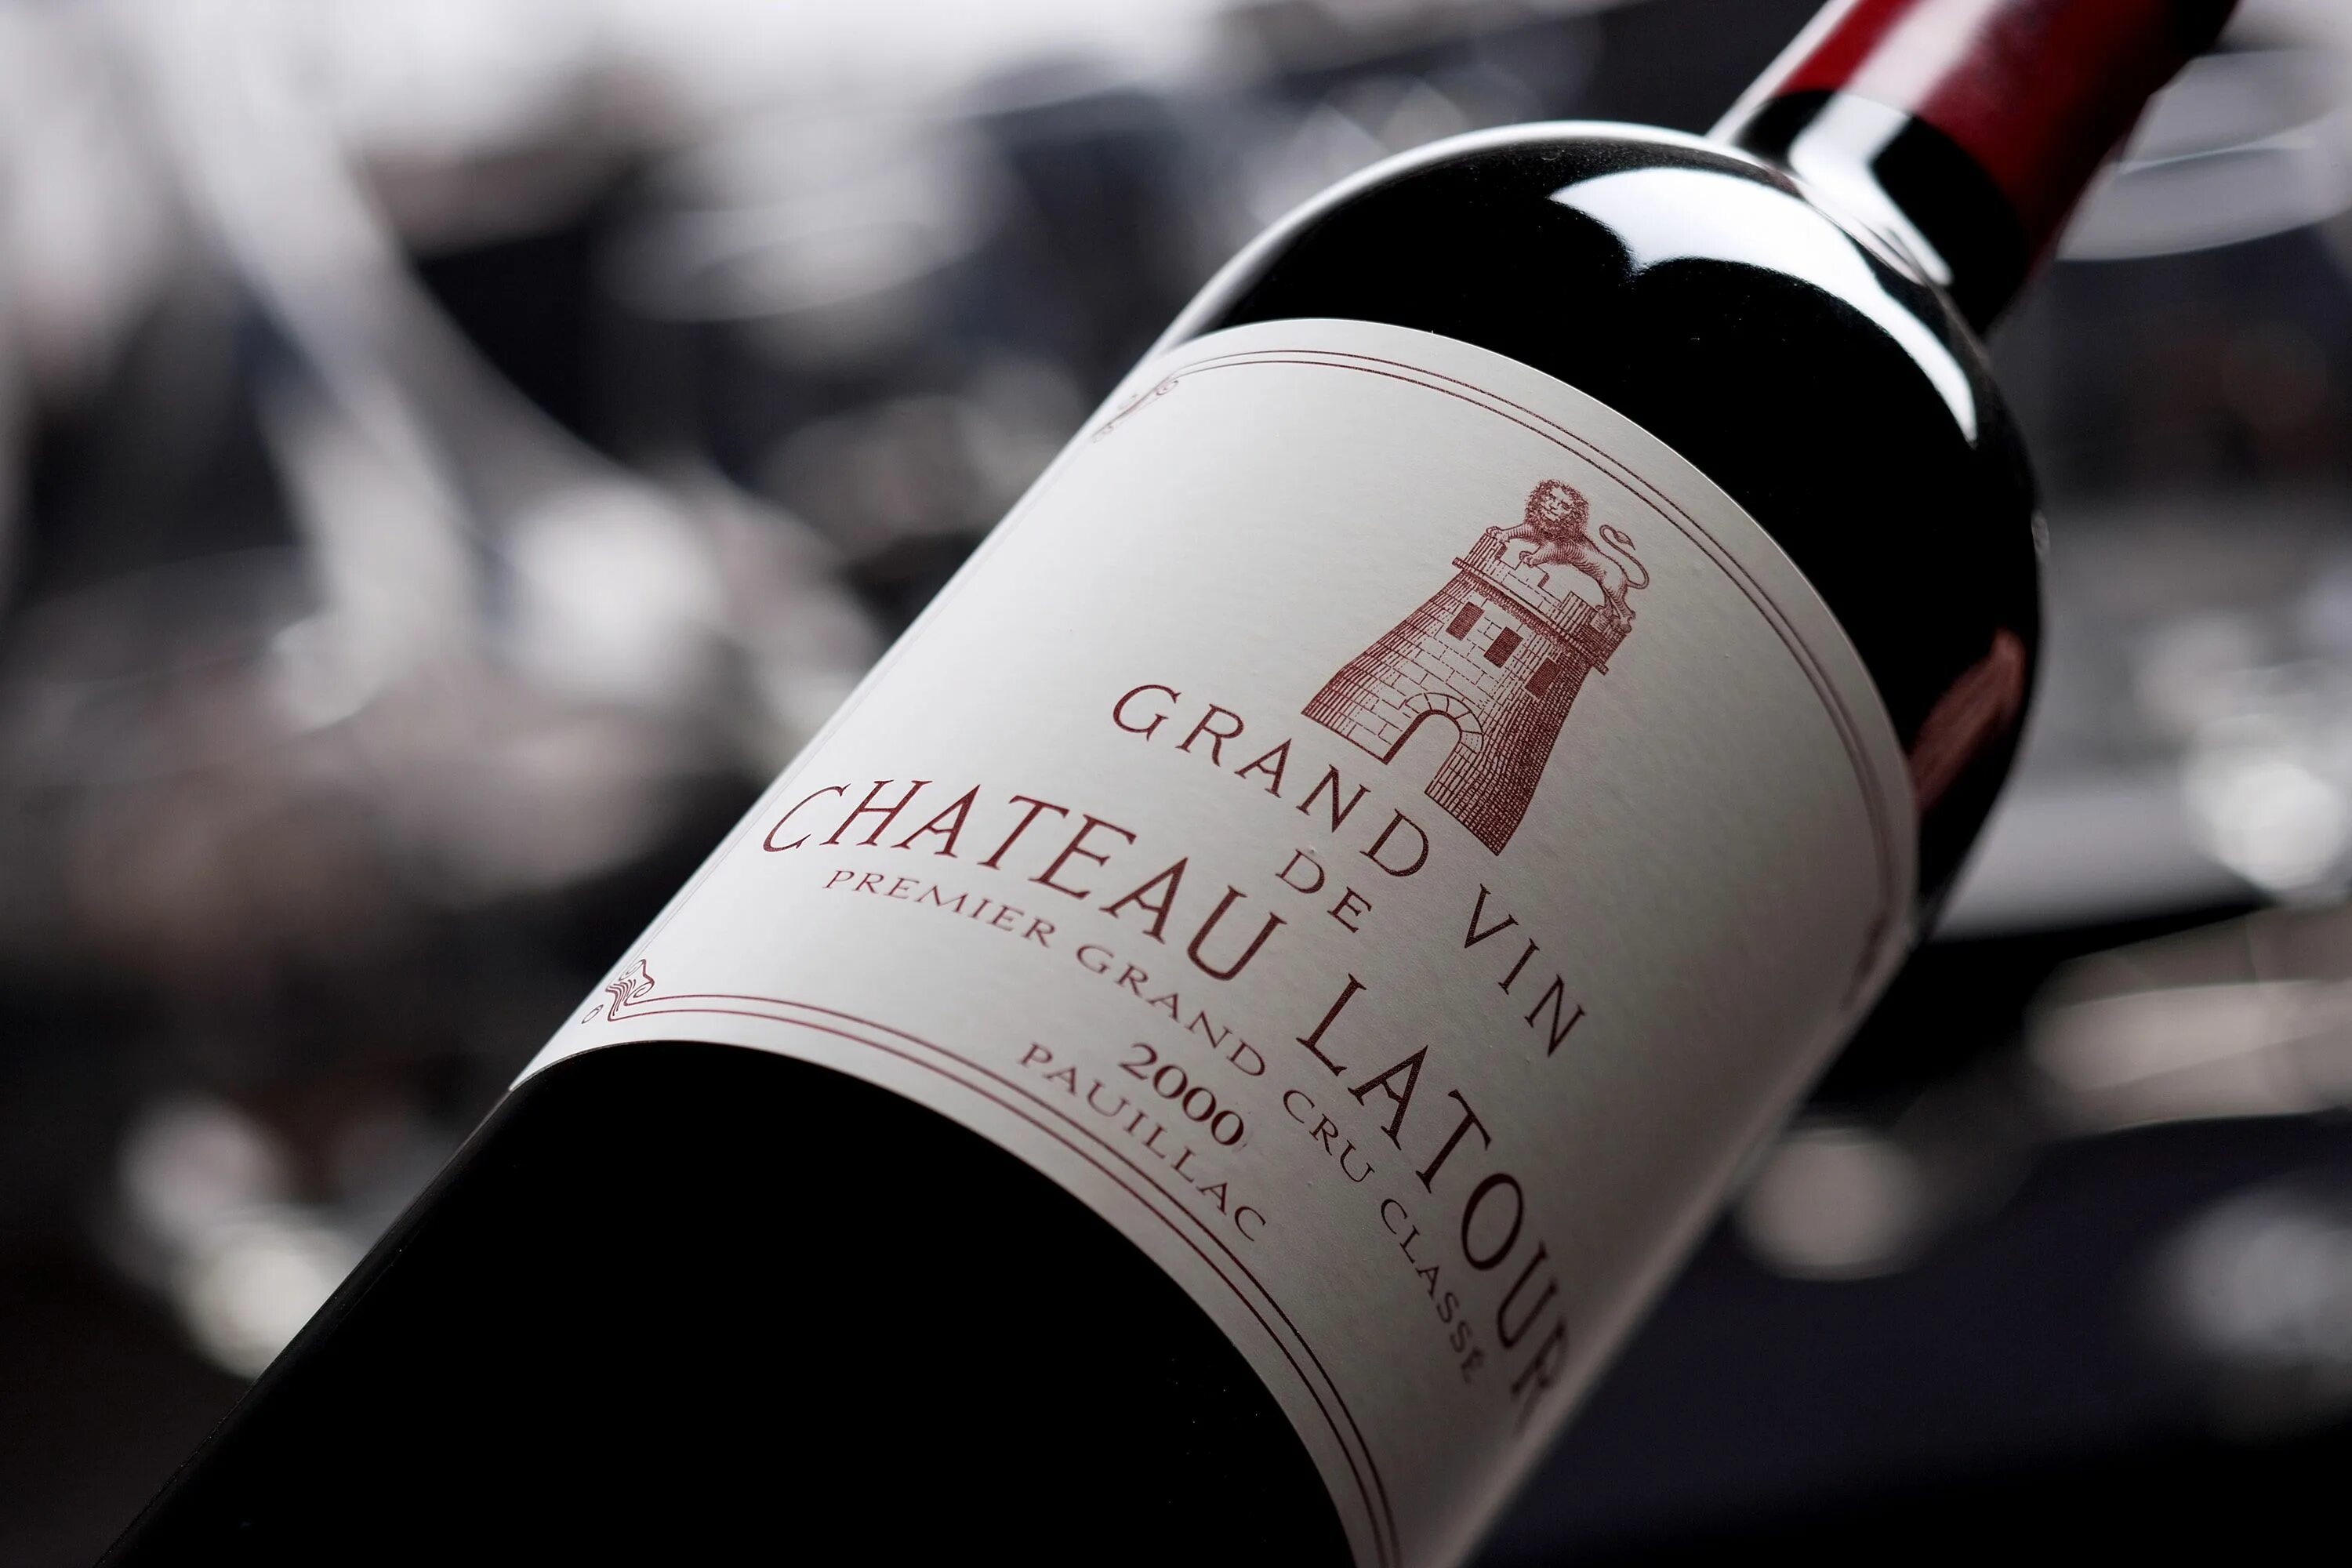 Chateau Latour Bordeaux вино. Latour (Латур) вино Франции. Шато Латур винодельня. Вино Шато Латур 1886. Сорта французских вин